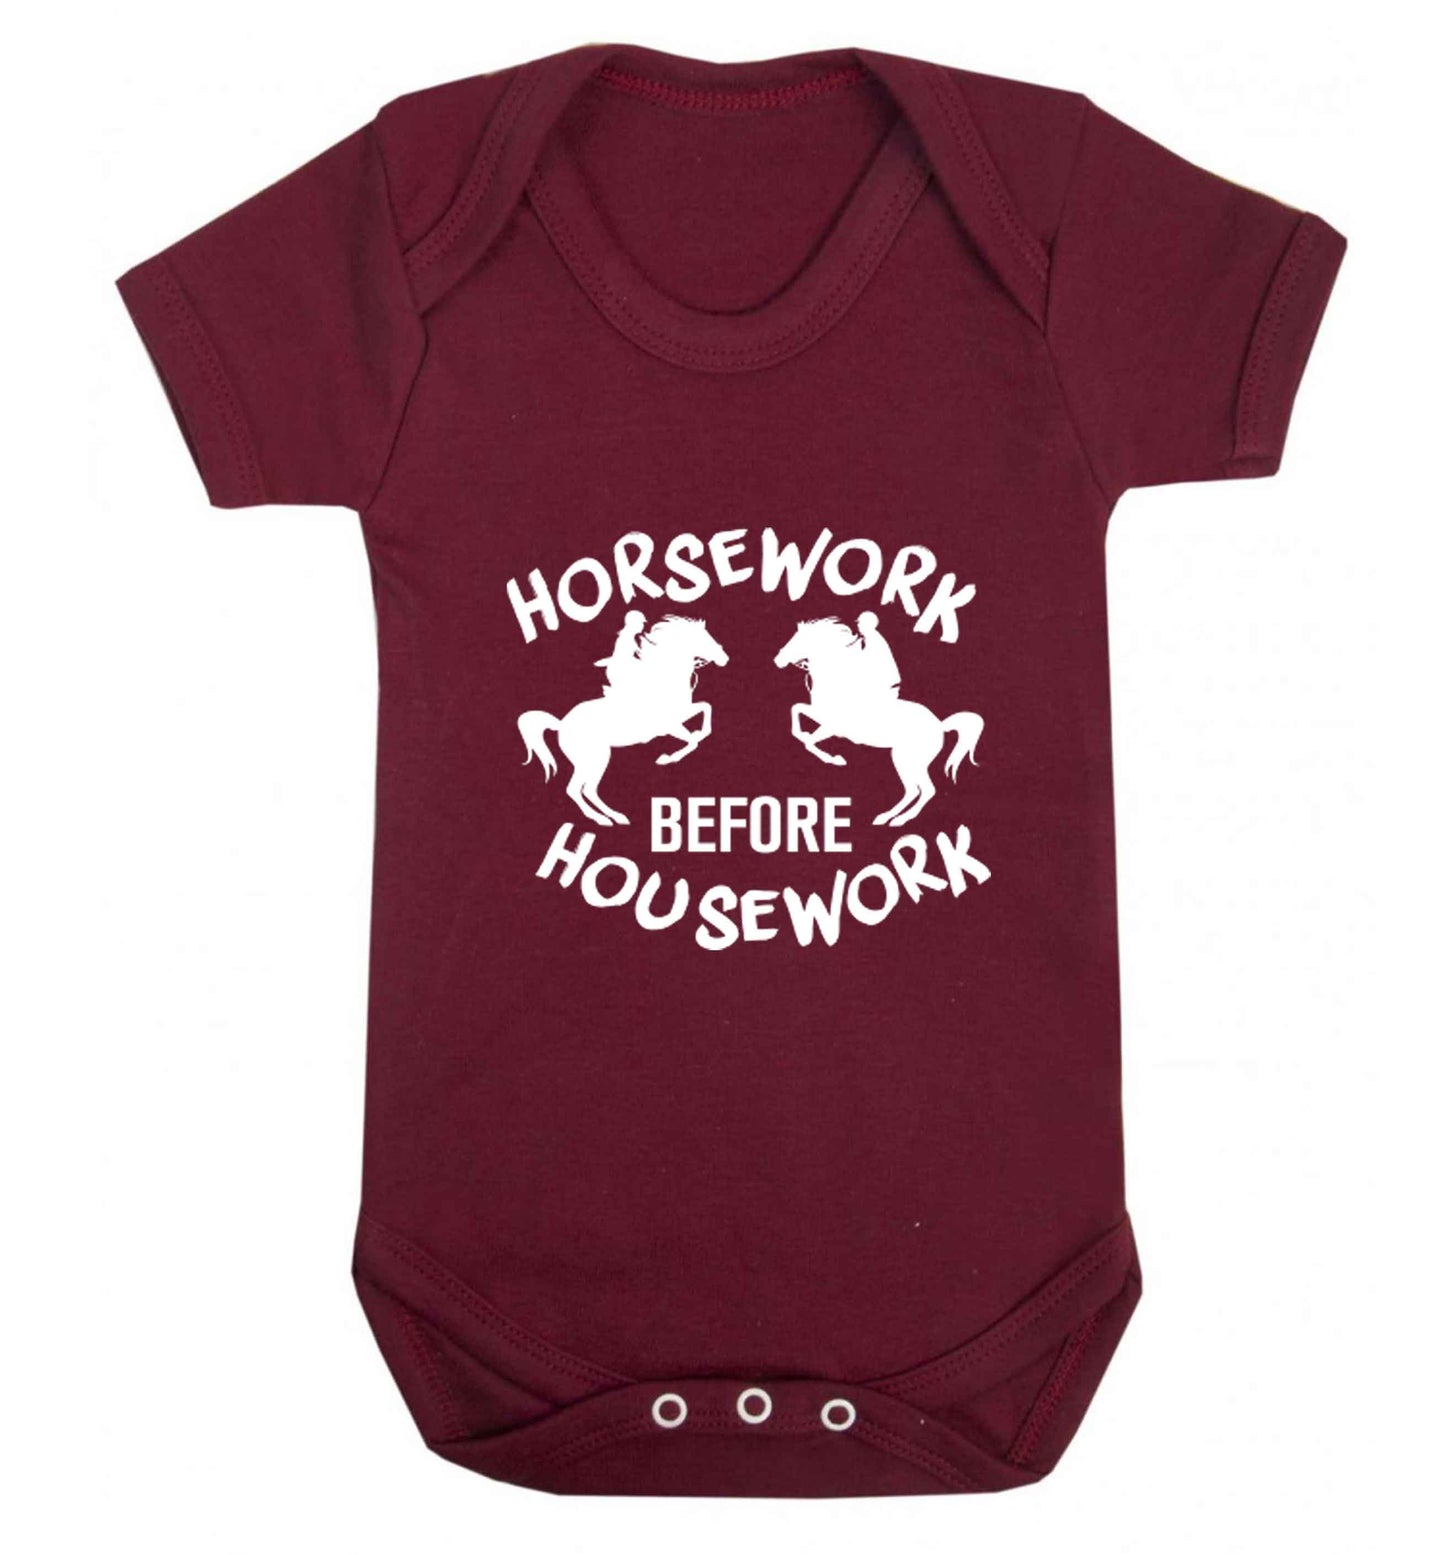 Horsework before housework baby vest maroon 18-24 months